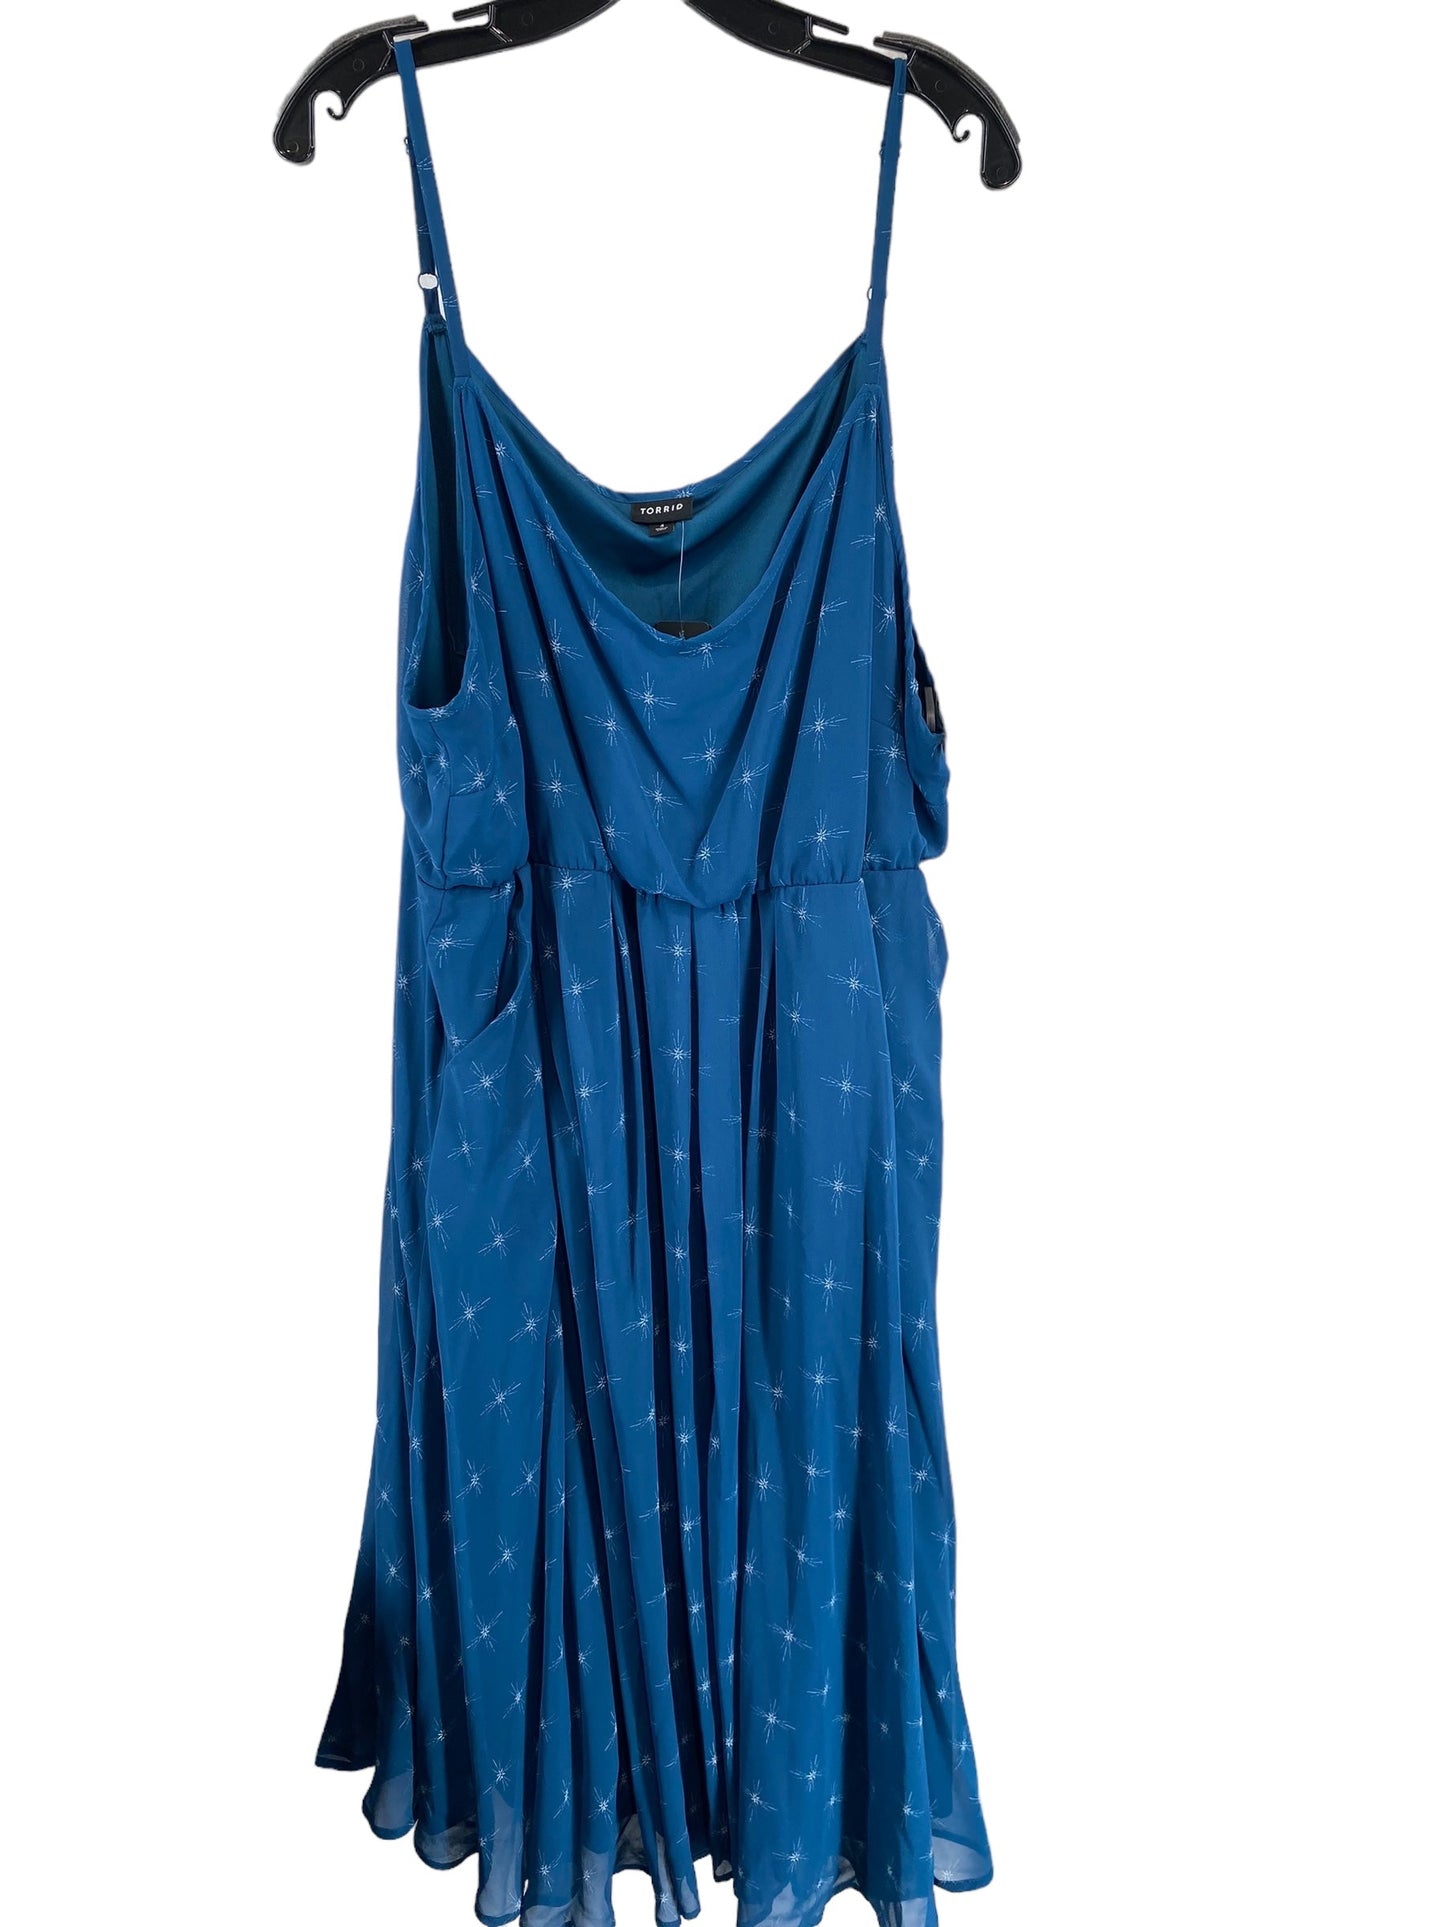 Blue Dress Casual Short Torrid, Size 4